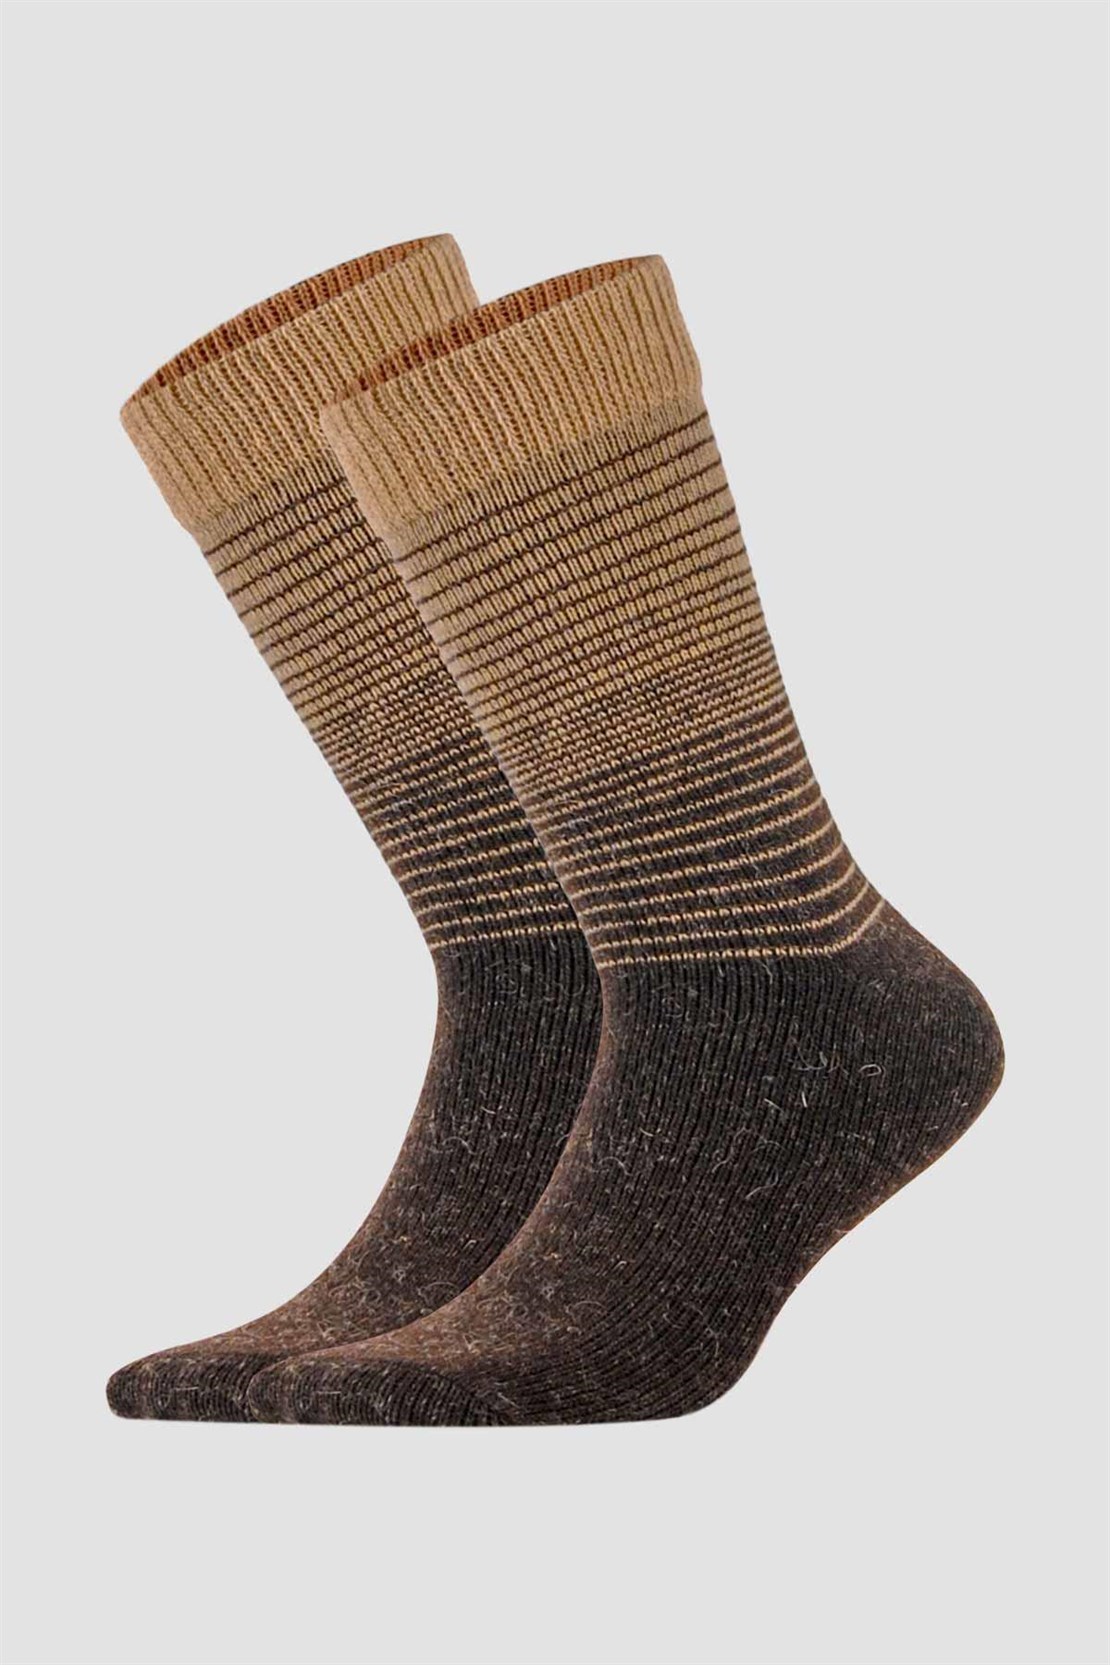 Alpaca Wool Socks 2 Pairs, Extra Thick Natural Thermal Winter Socks Home  Sock